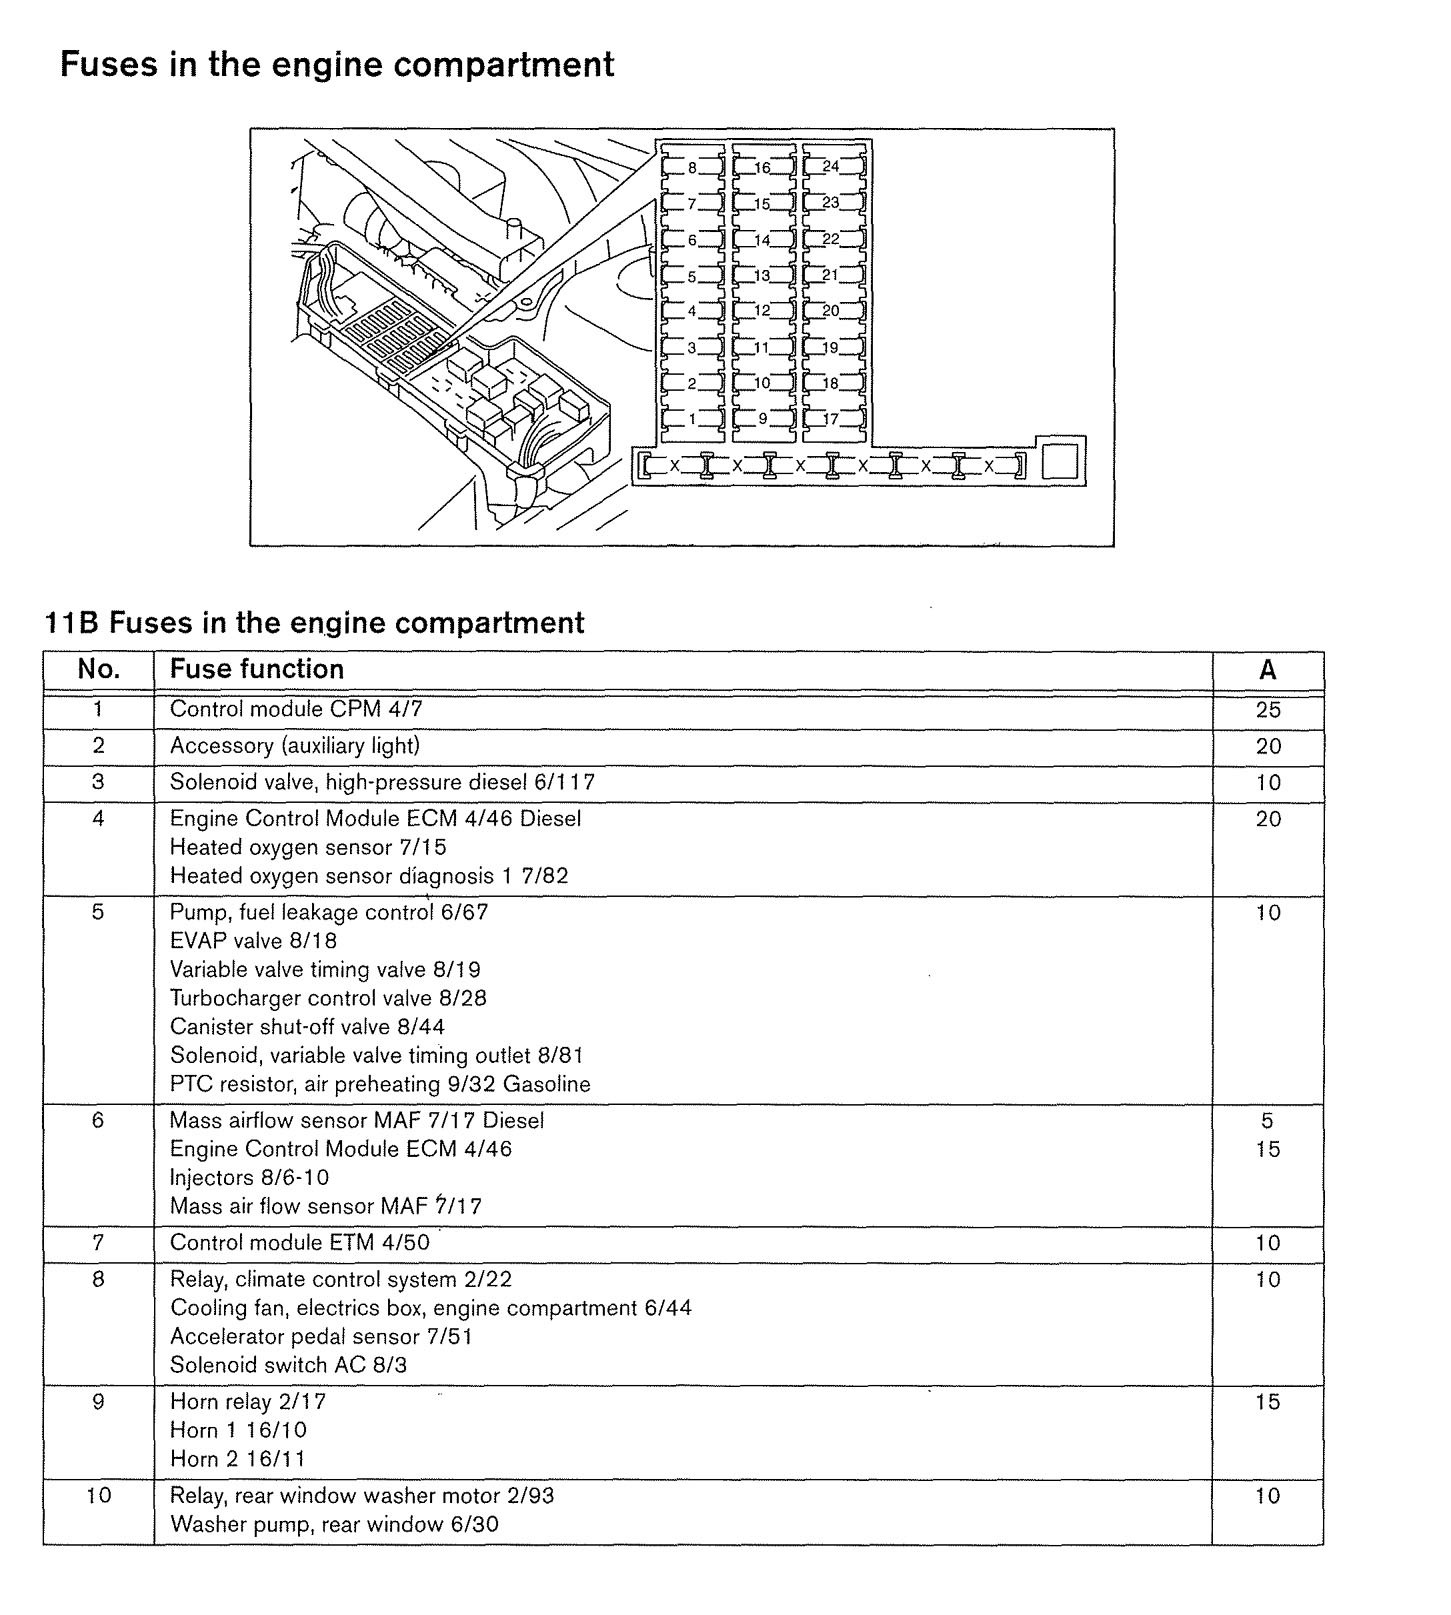 Diagram  Volvo Xc60 2014 Electrical Wiring Diagram Manual